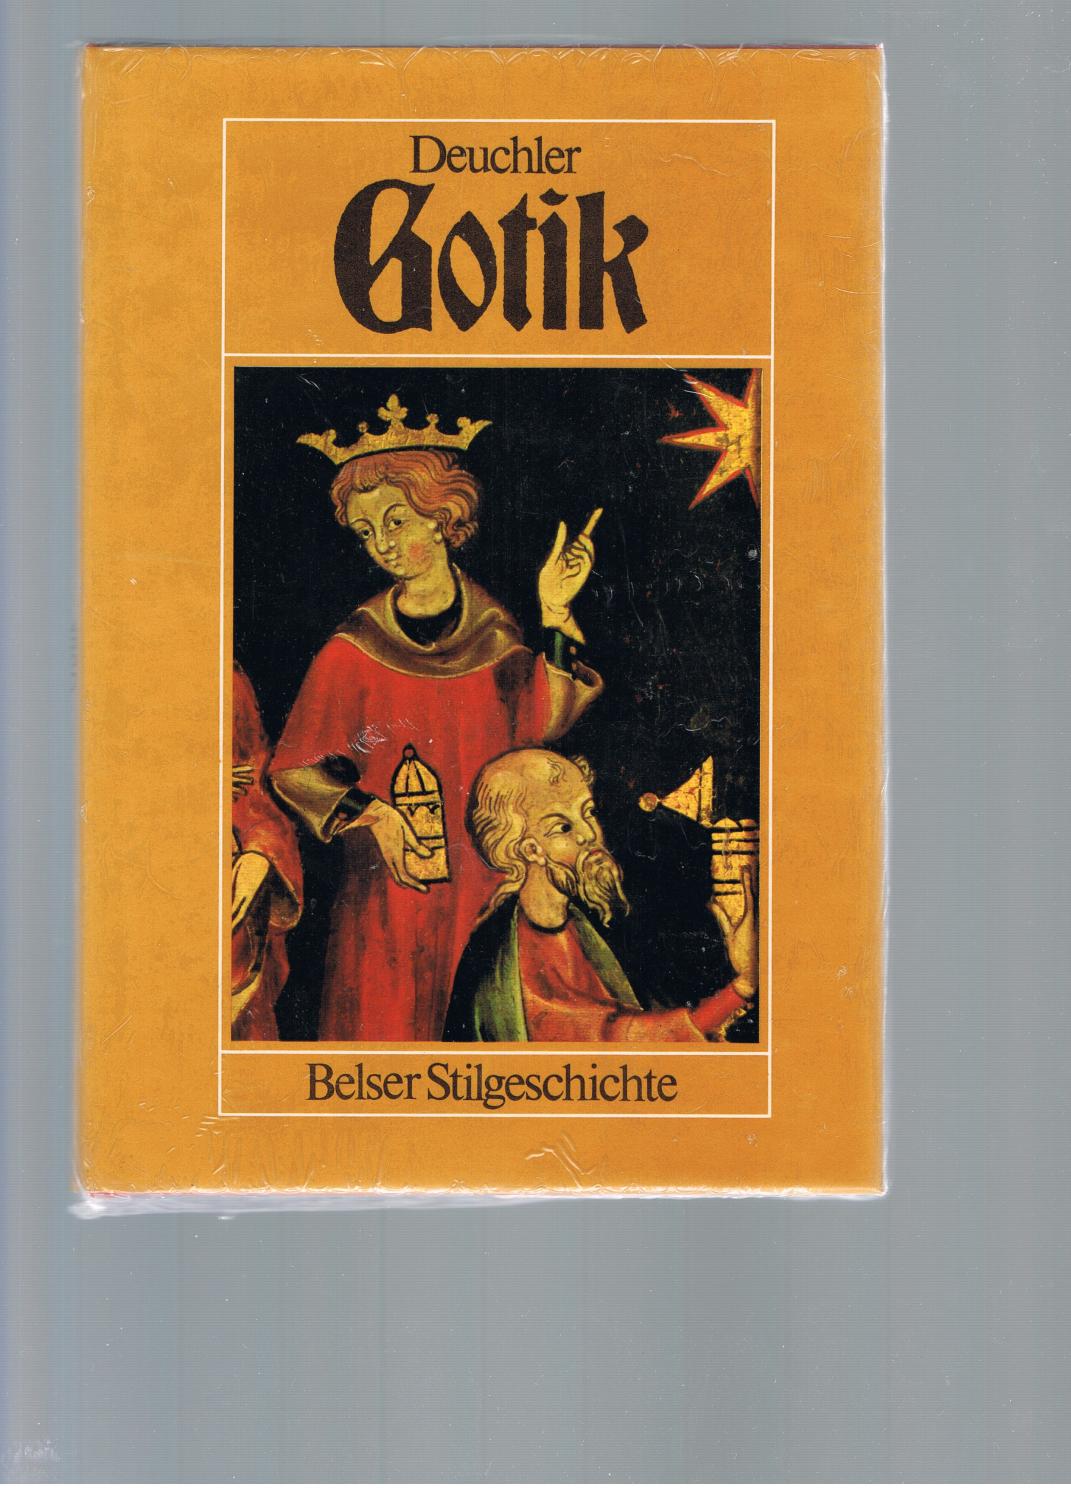 Belser Stilgeschichte: Gotik